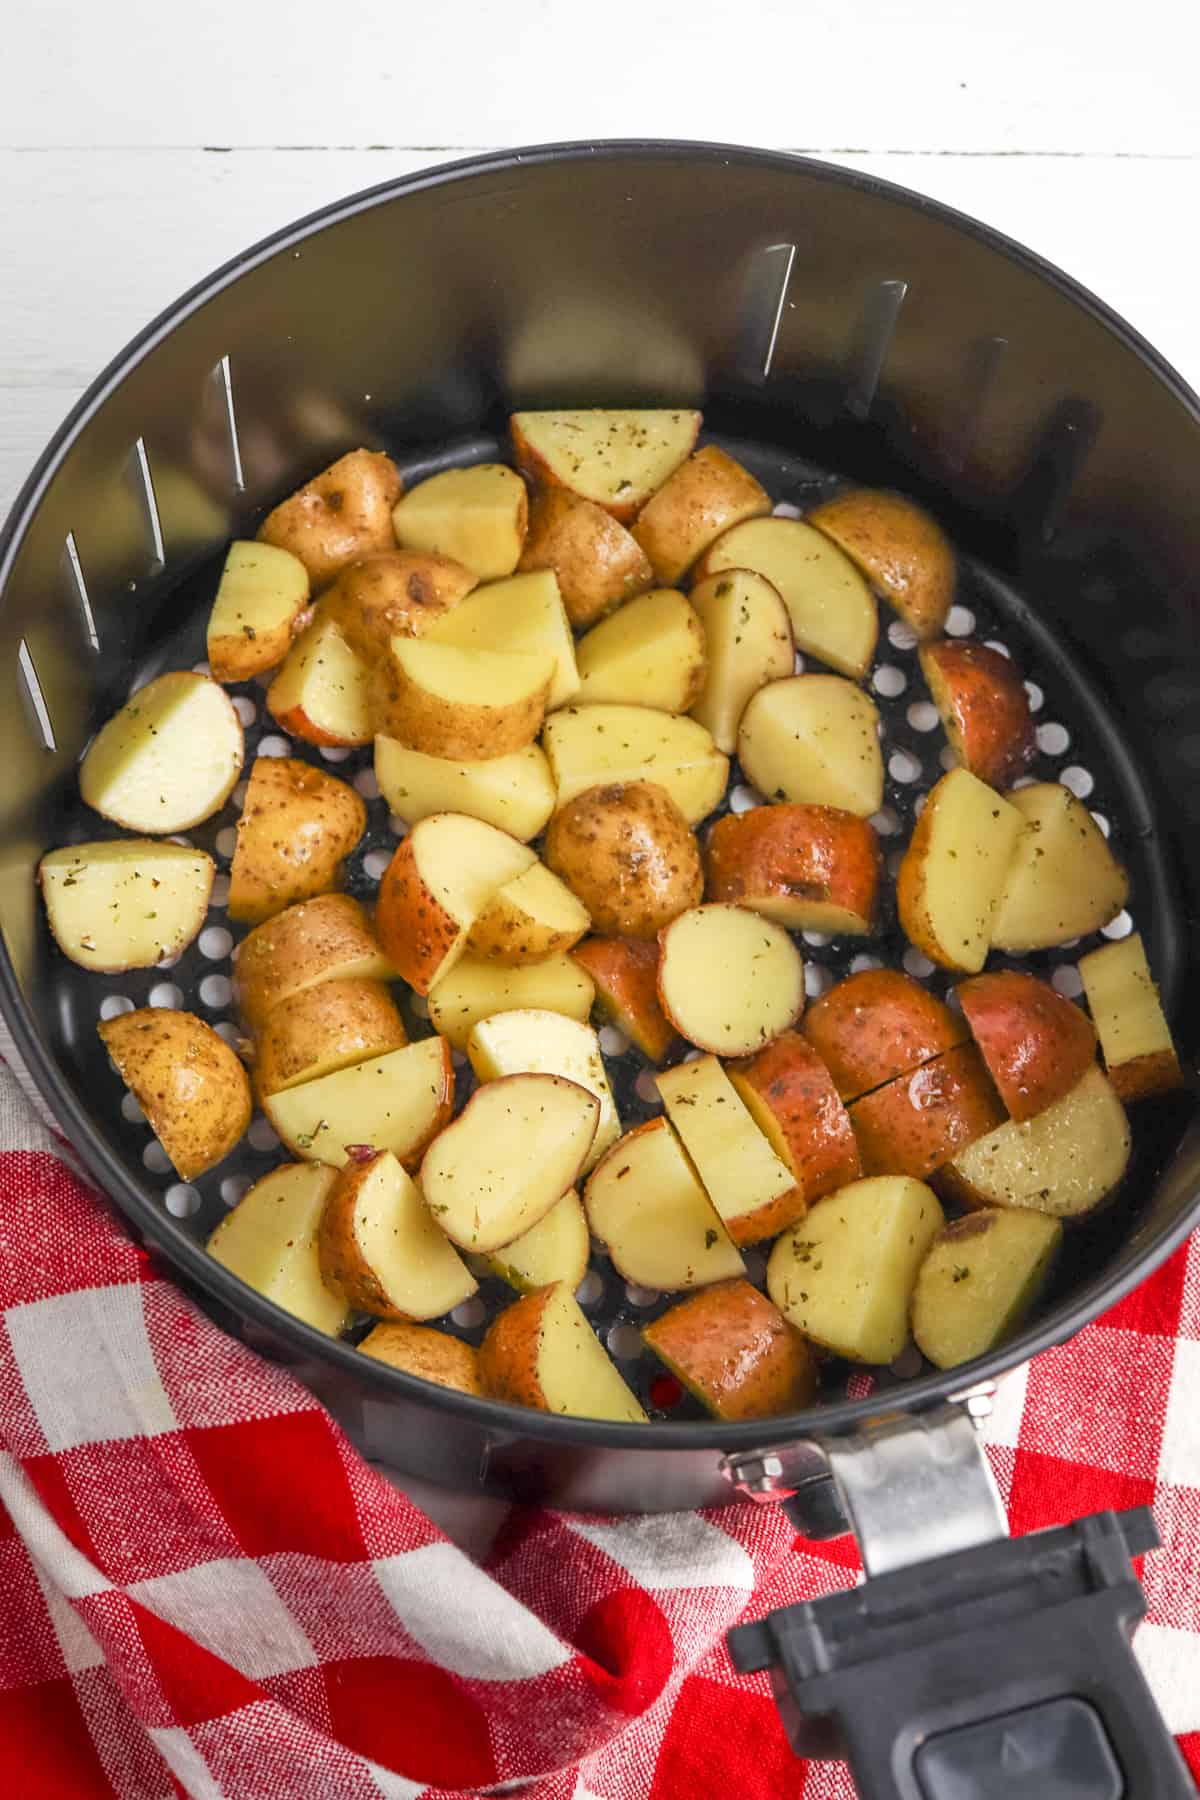 Uncooked potatoes in air fryer.